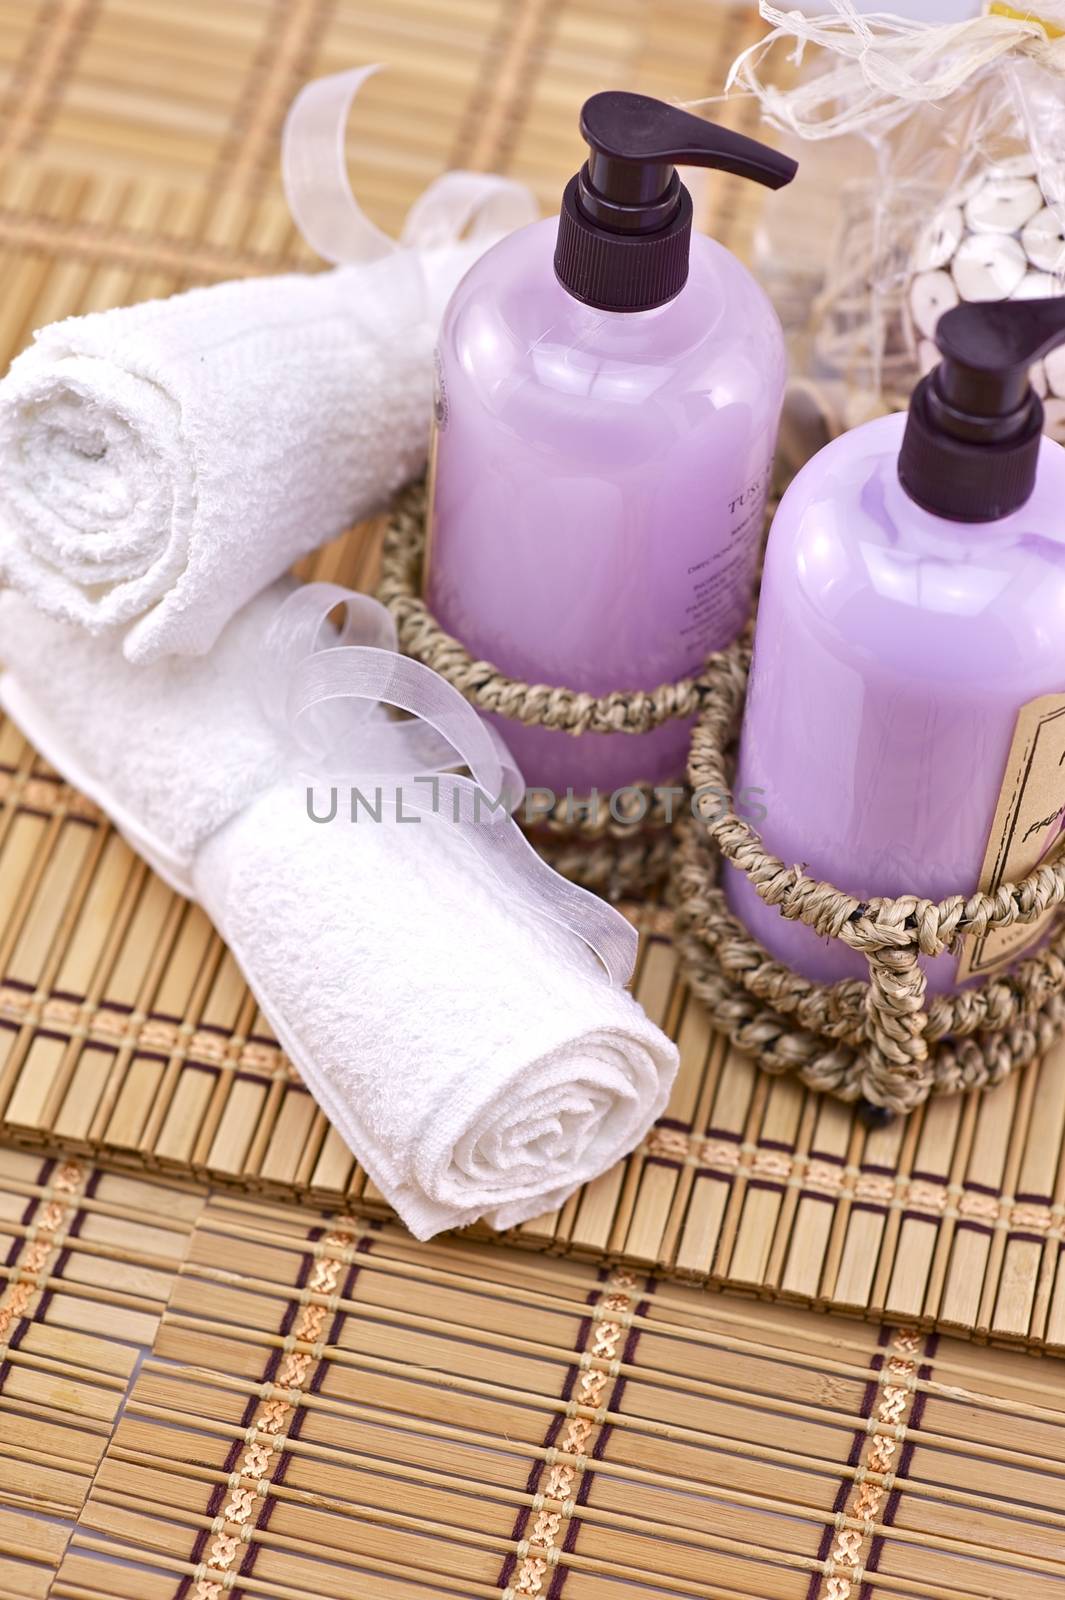 Bath Soaps and Towels. Bathroom Set. Bathroom Decoration Elements